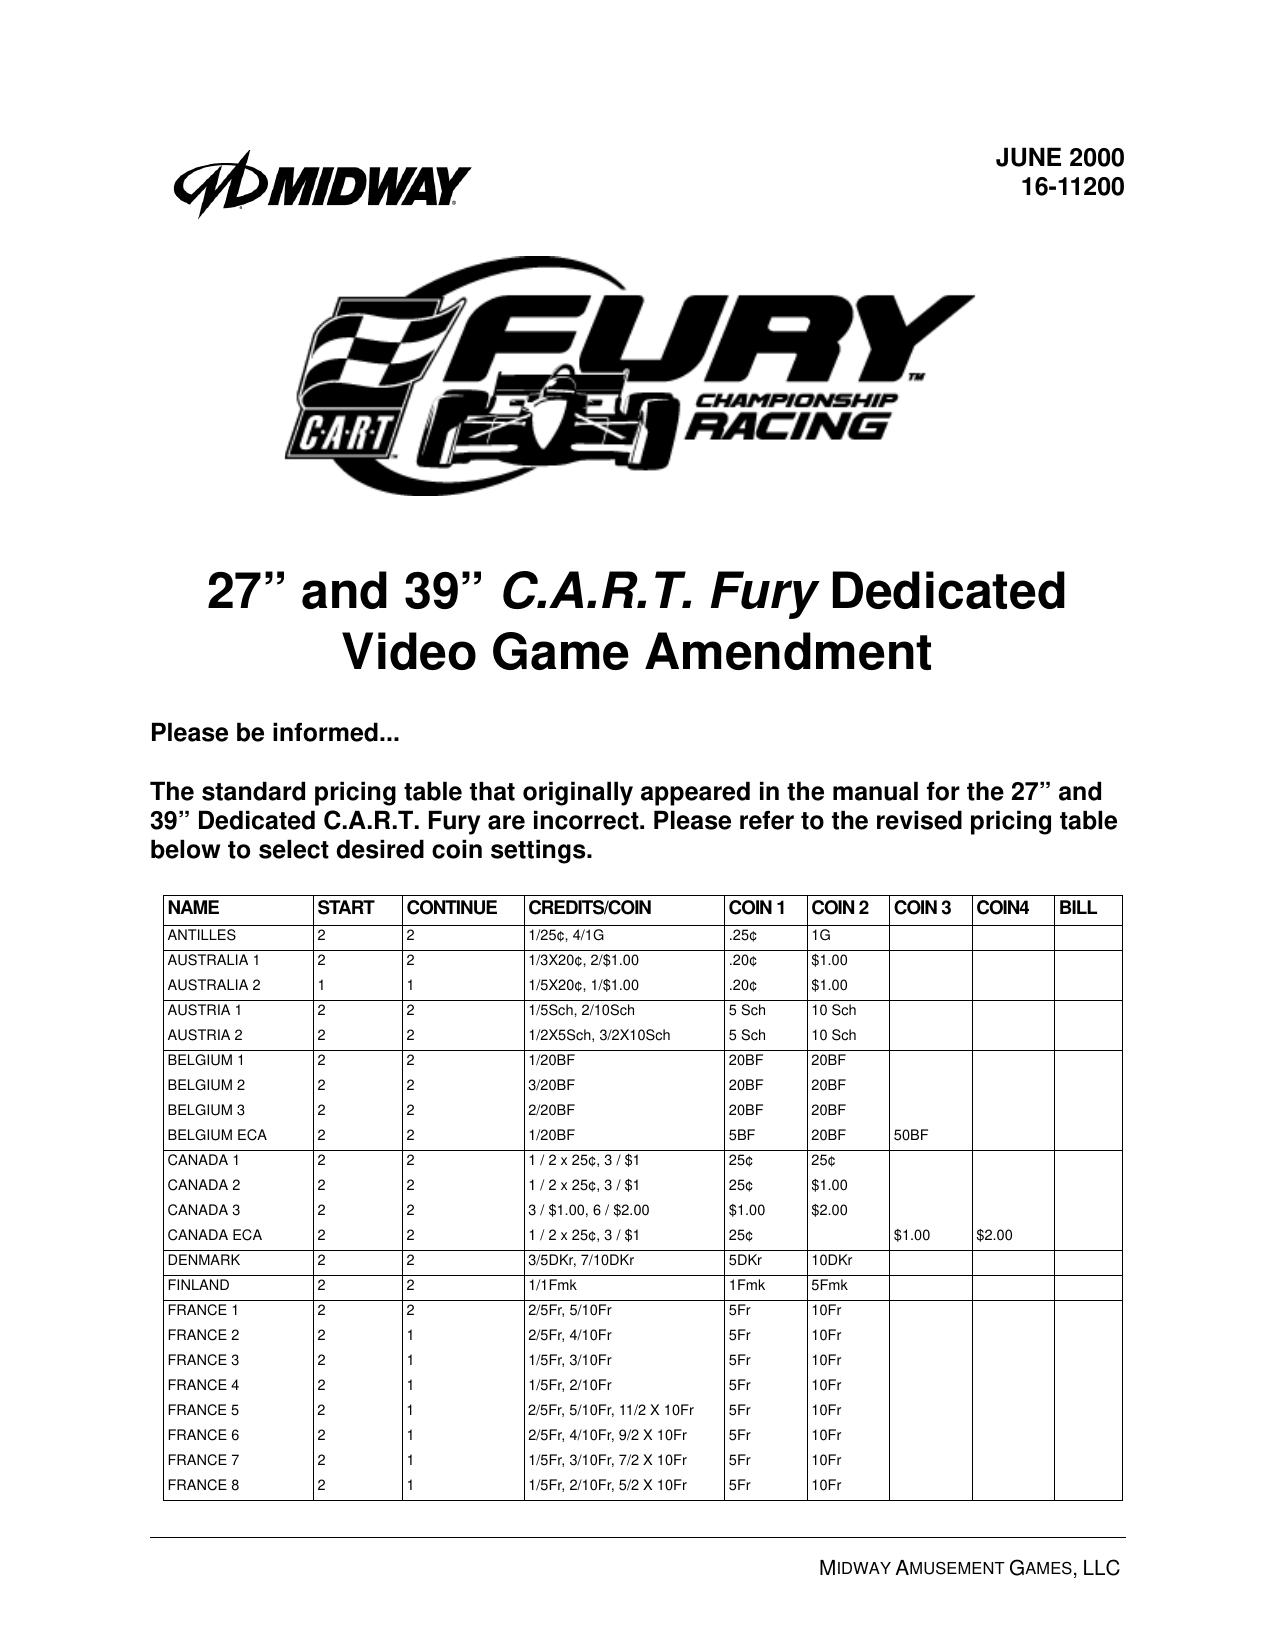 Kart Fury Pricing Amendment